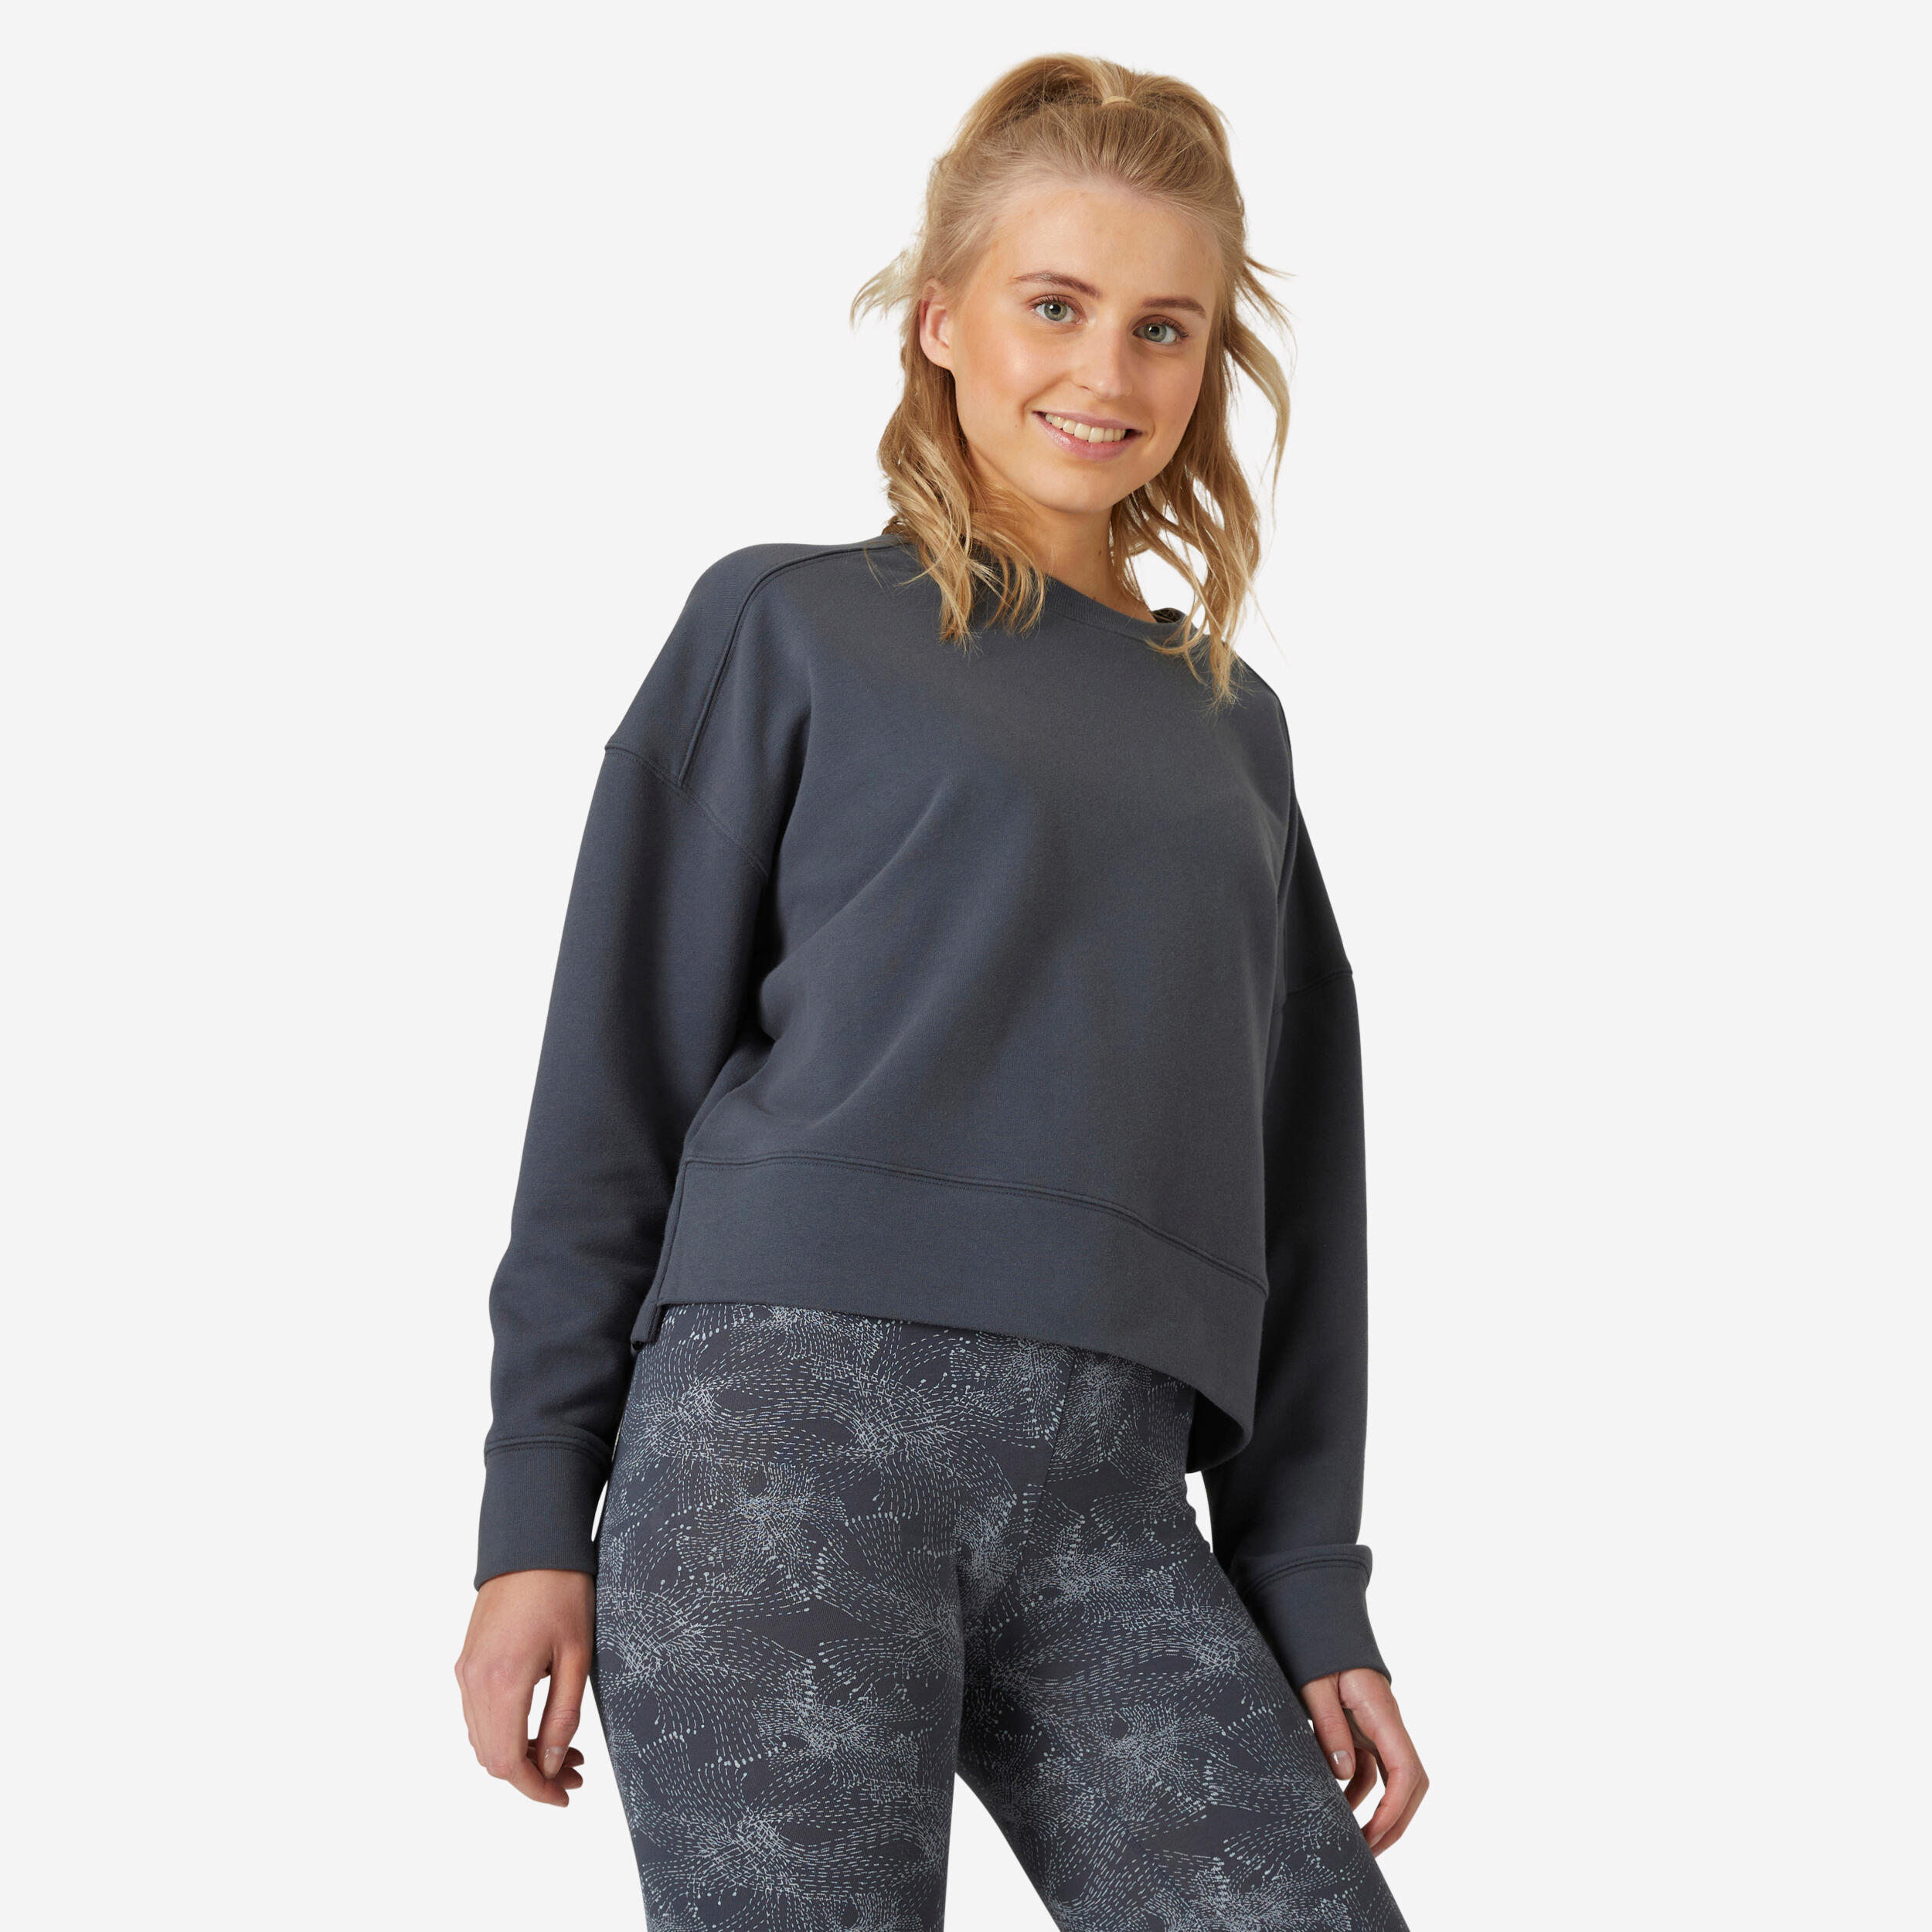 DOMYOS Women's Loose-Fit Fitness Sweatshirt 120 - Grey